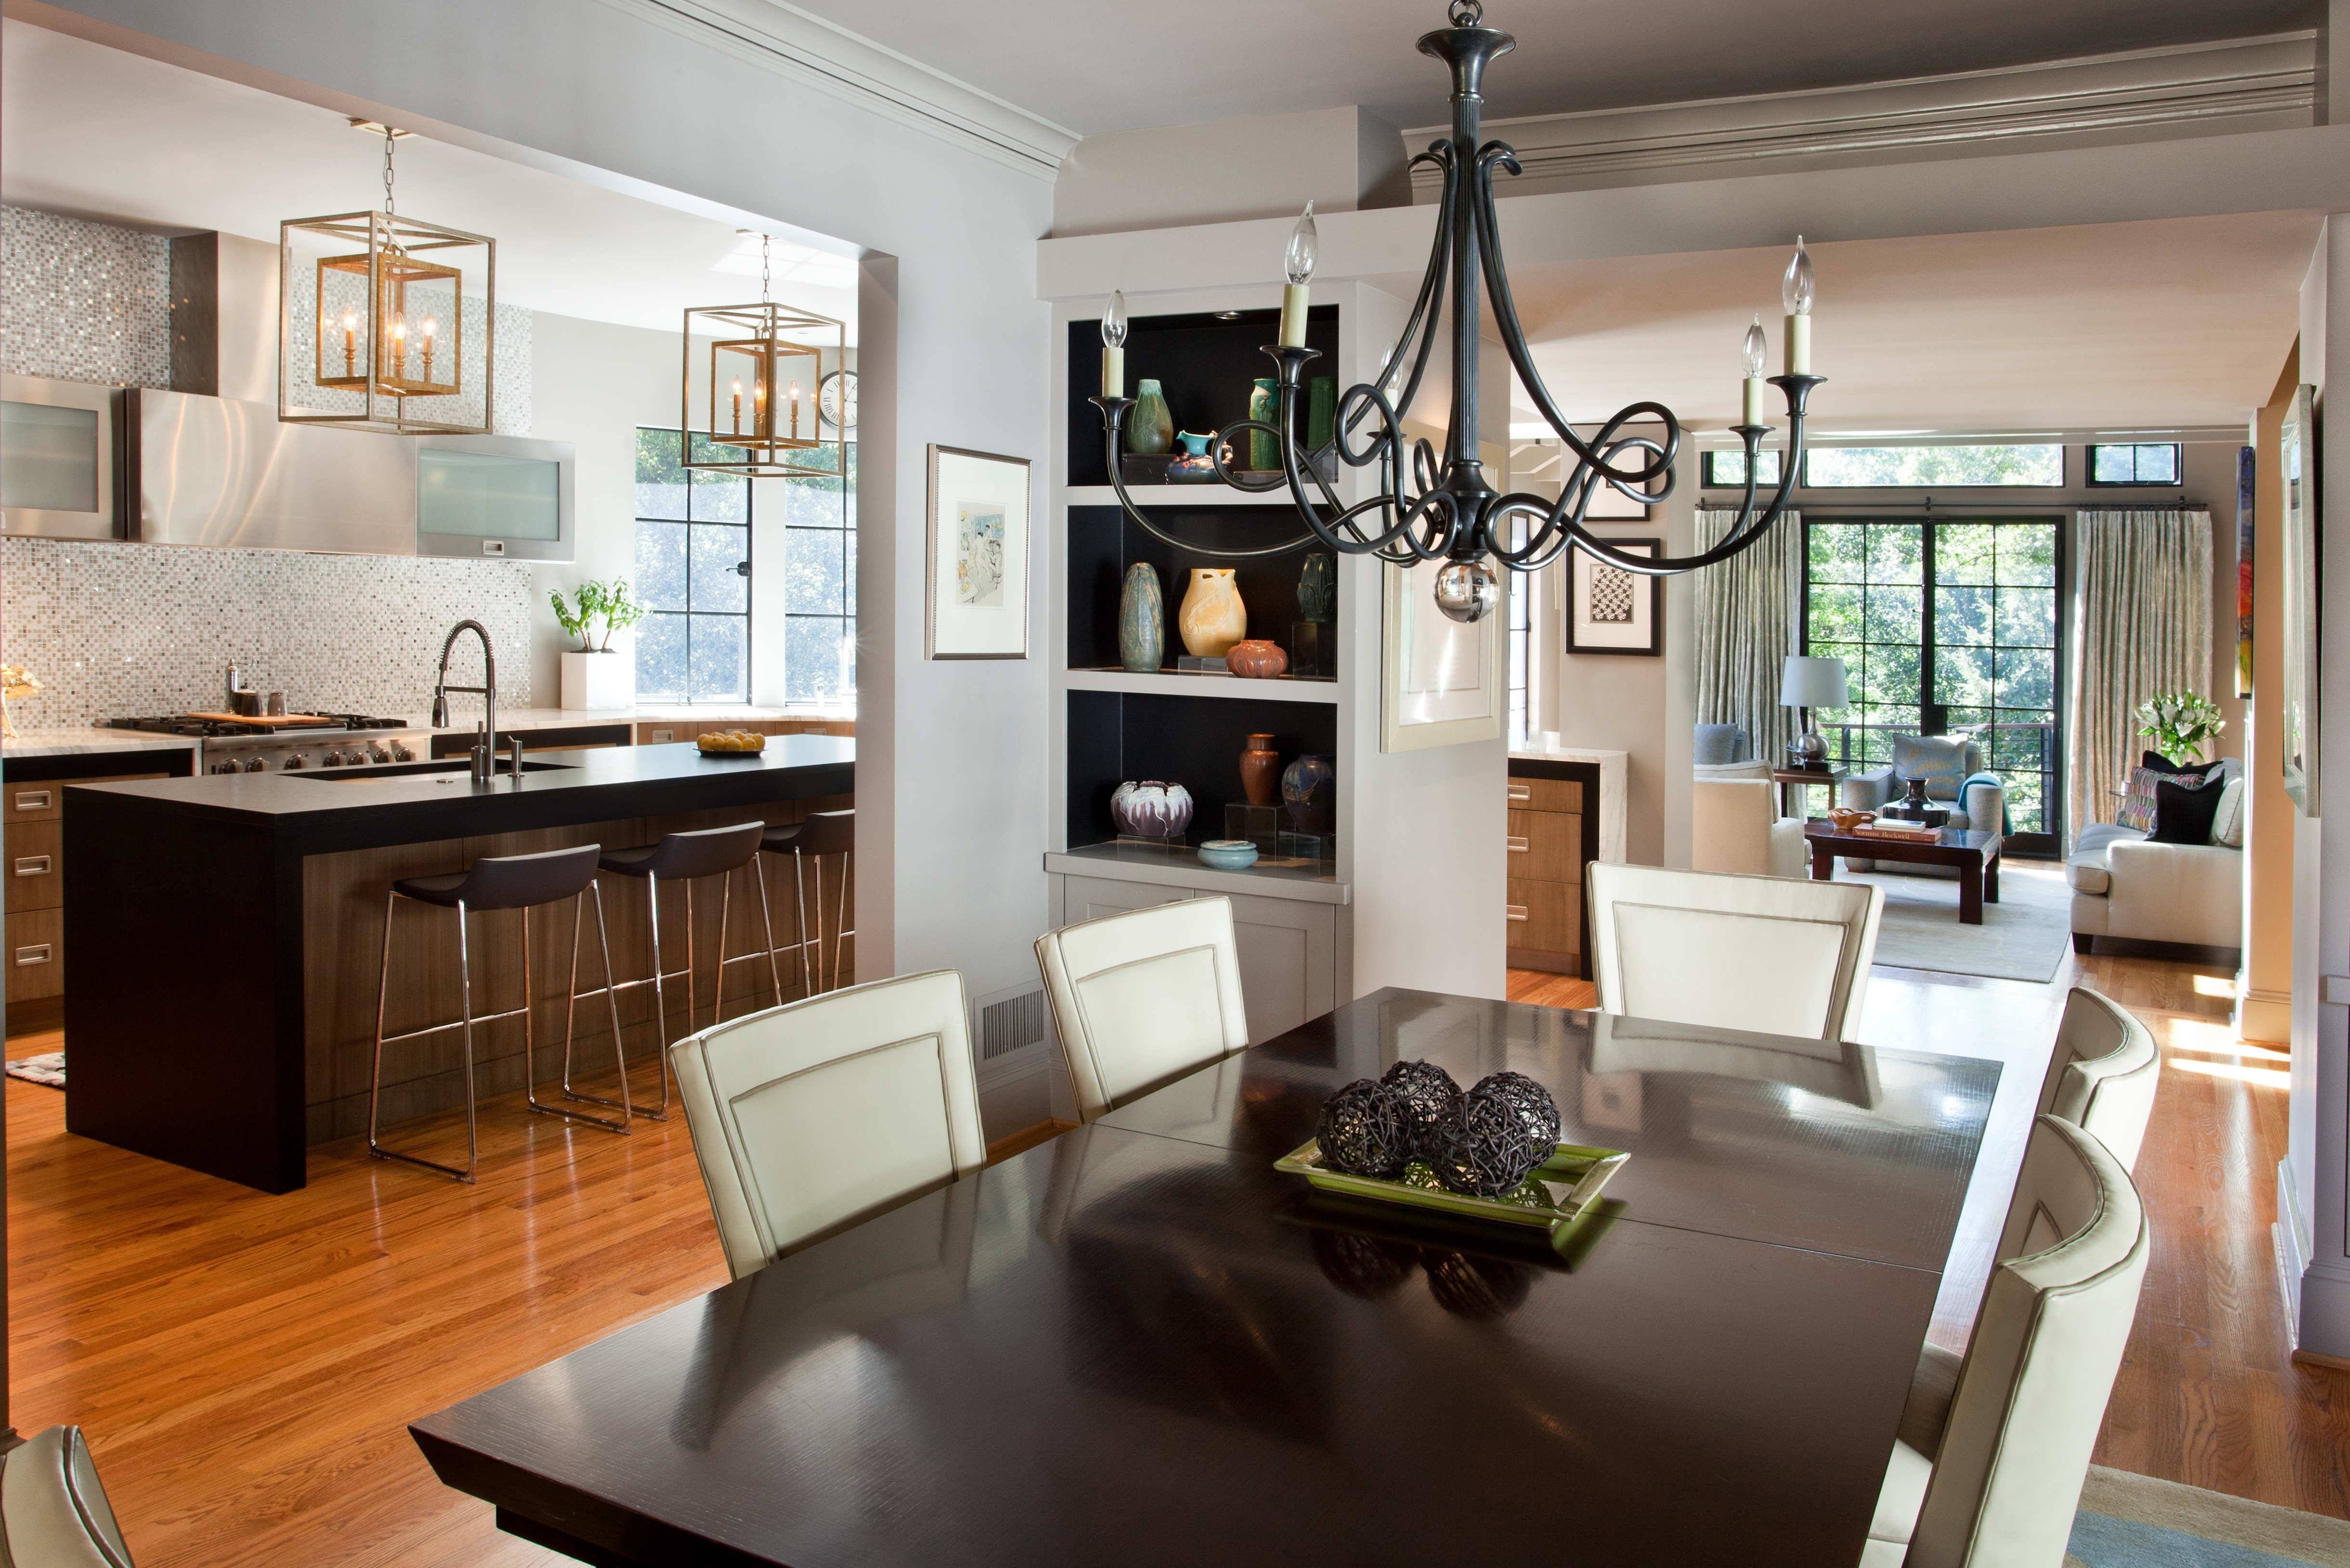 Kitchen Dining Room Design Layout – Home Design Inside Sofas For Kitchen Diner (View 30 of 30)